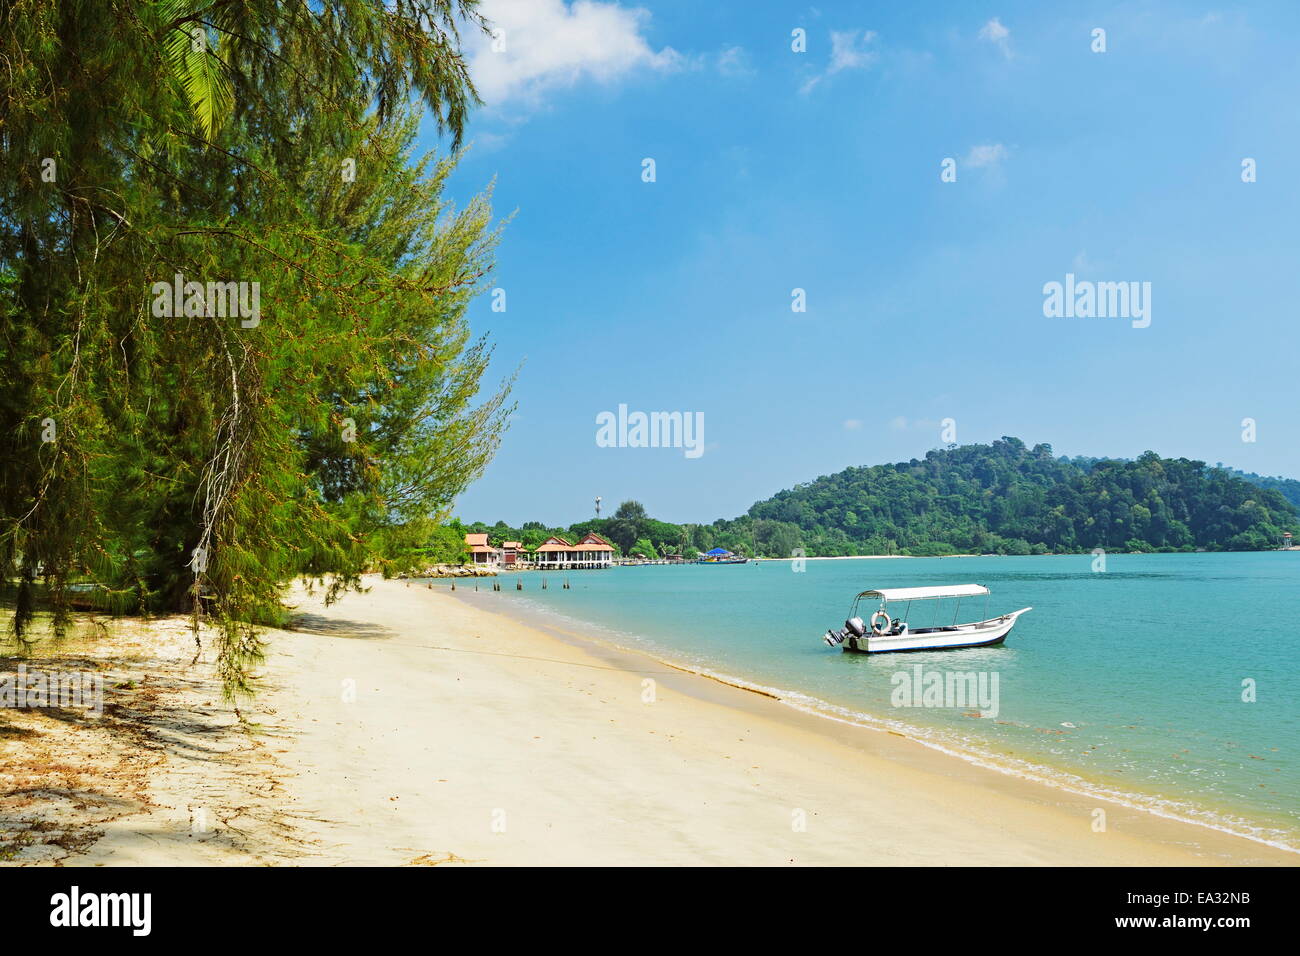 Teluk Dalam, Pulau Pangkor (Pangkor Island), Perak, Malaysia, Southeast Asia, Asia Stock Photo